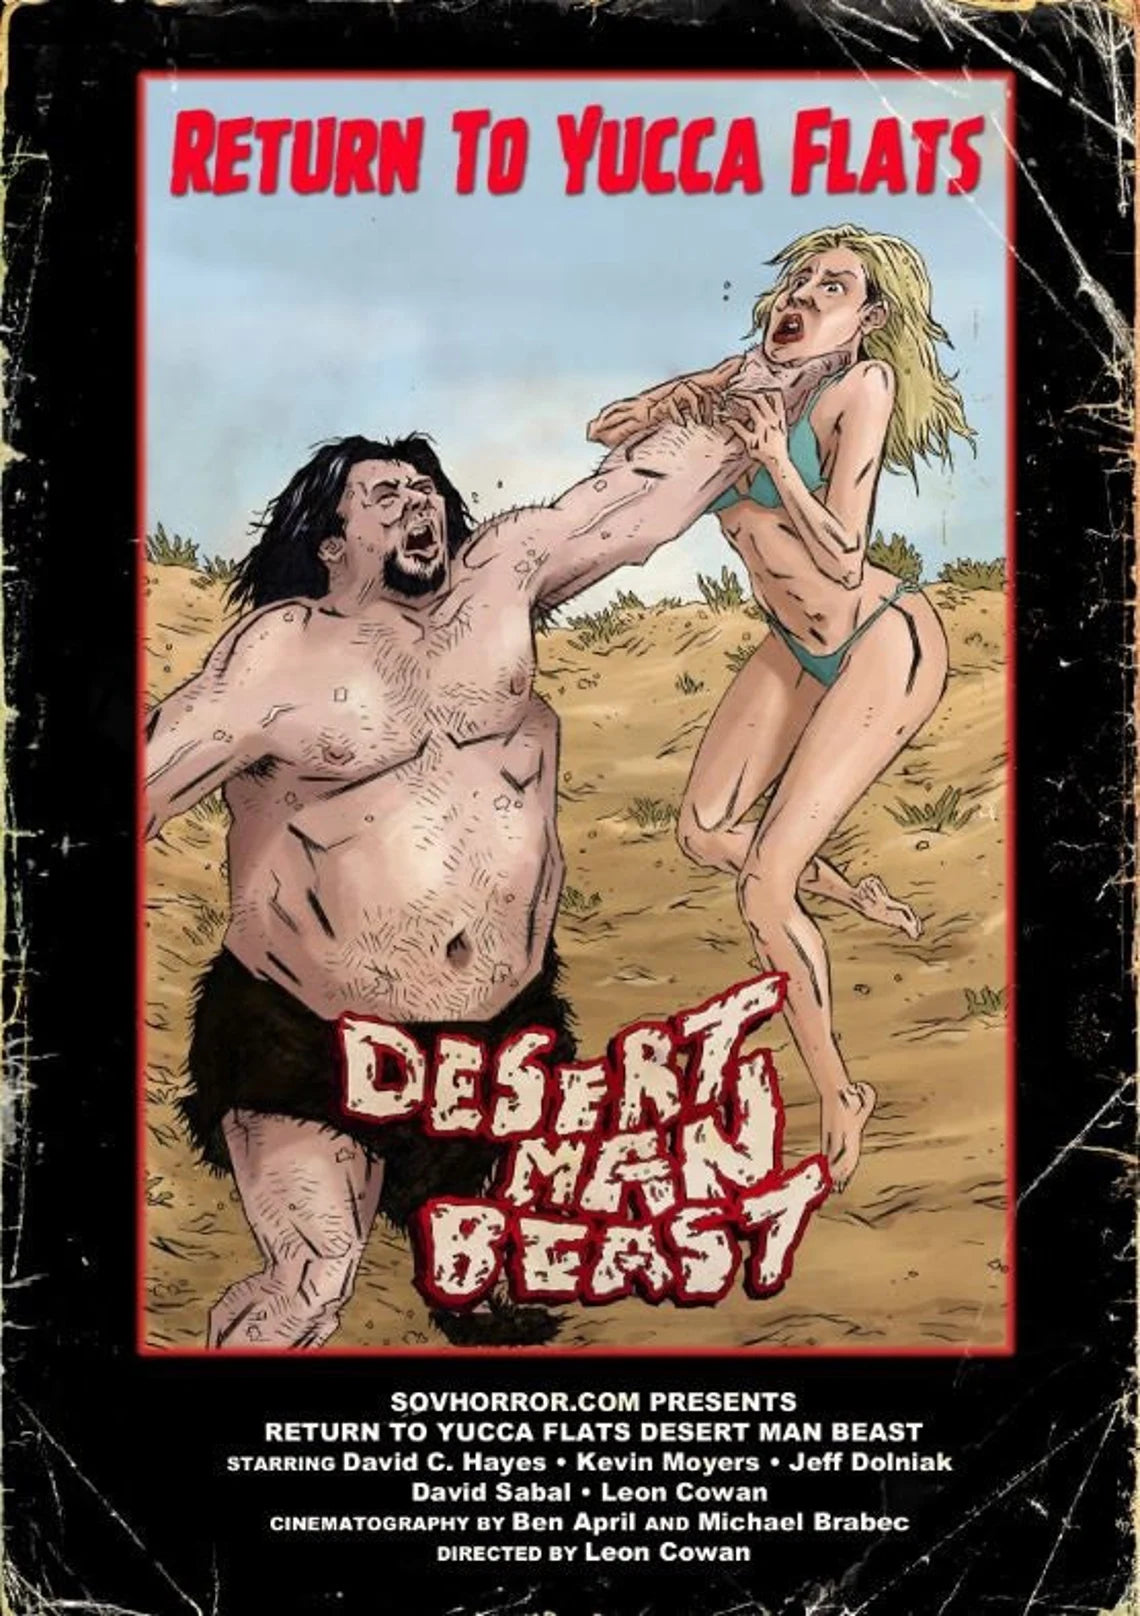 Return to Yucca Flats: Desert Man Beast DVD